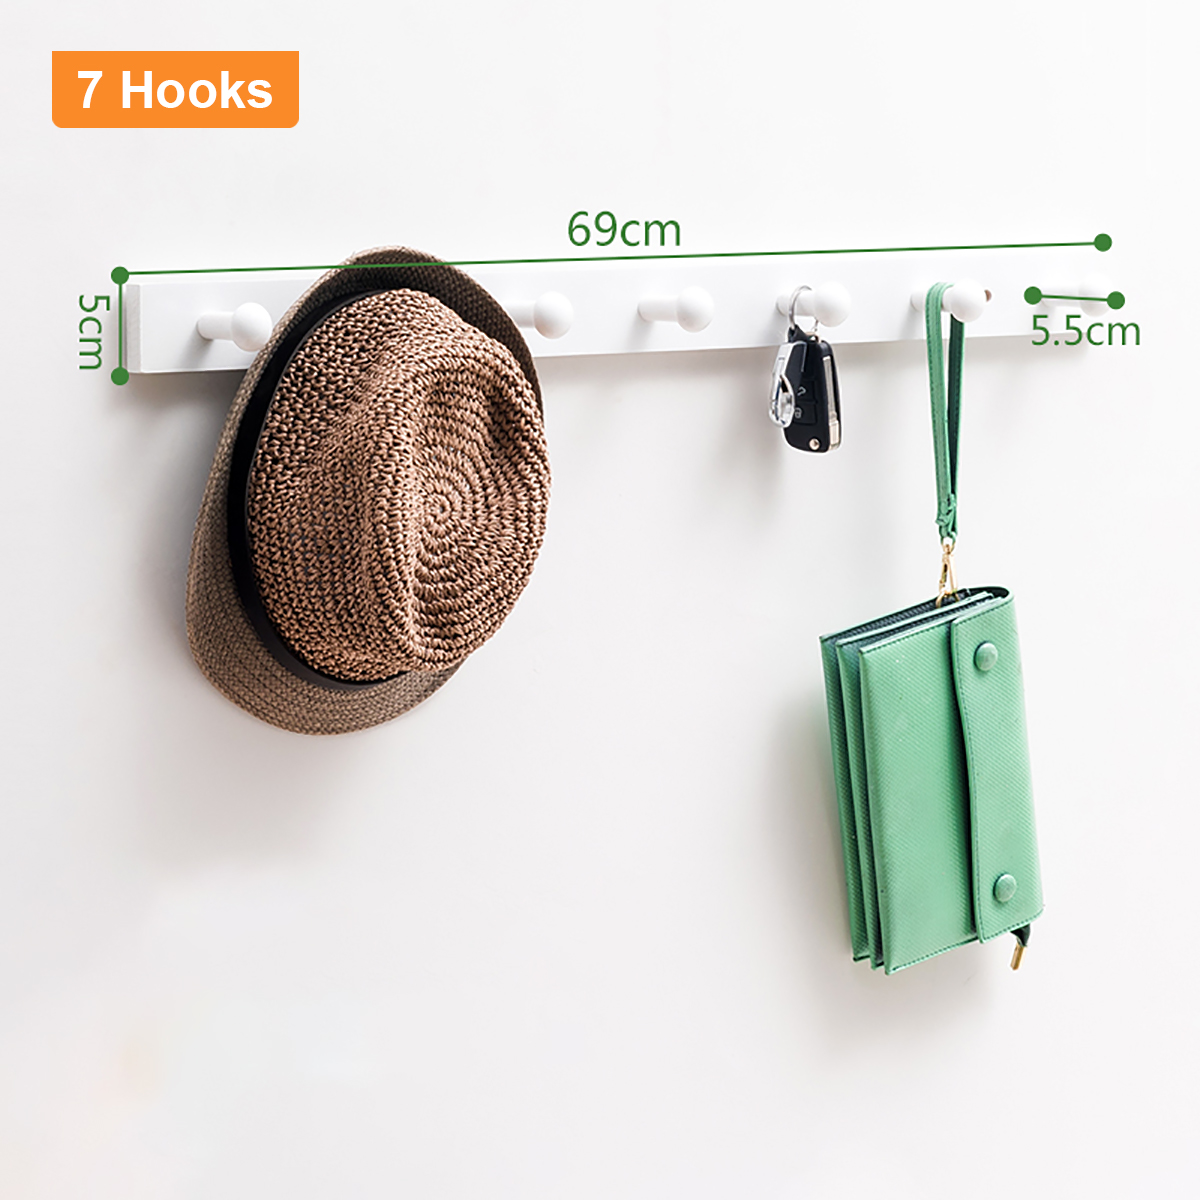 Coat-Hanger-Wall-Mounted-Rack-Rail-Hook-Bamboo-Wooden-Shelf-Clothes-Hat-Towel-Holder-1560812-2